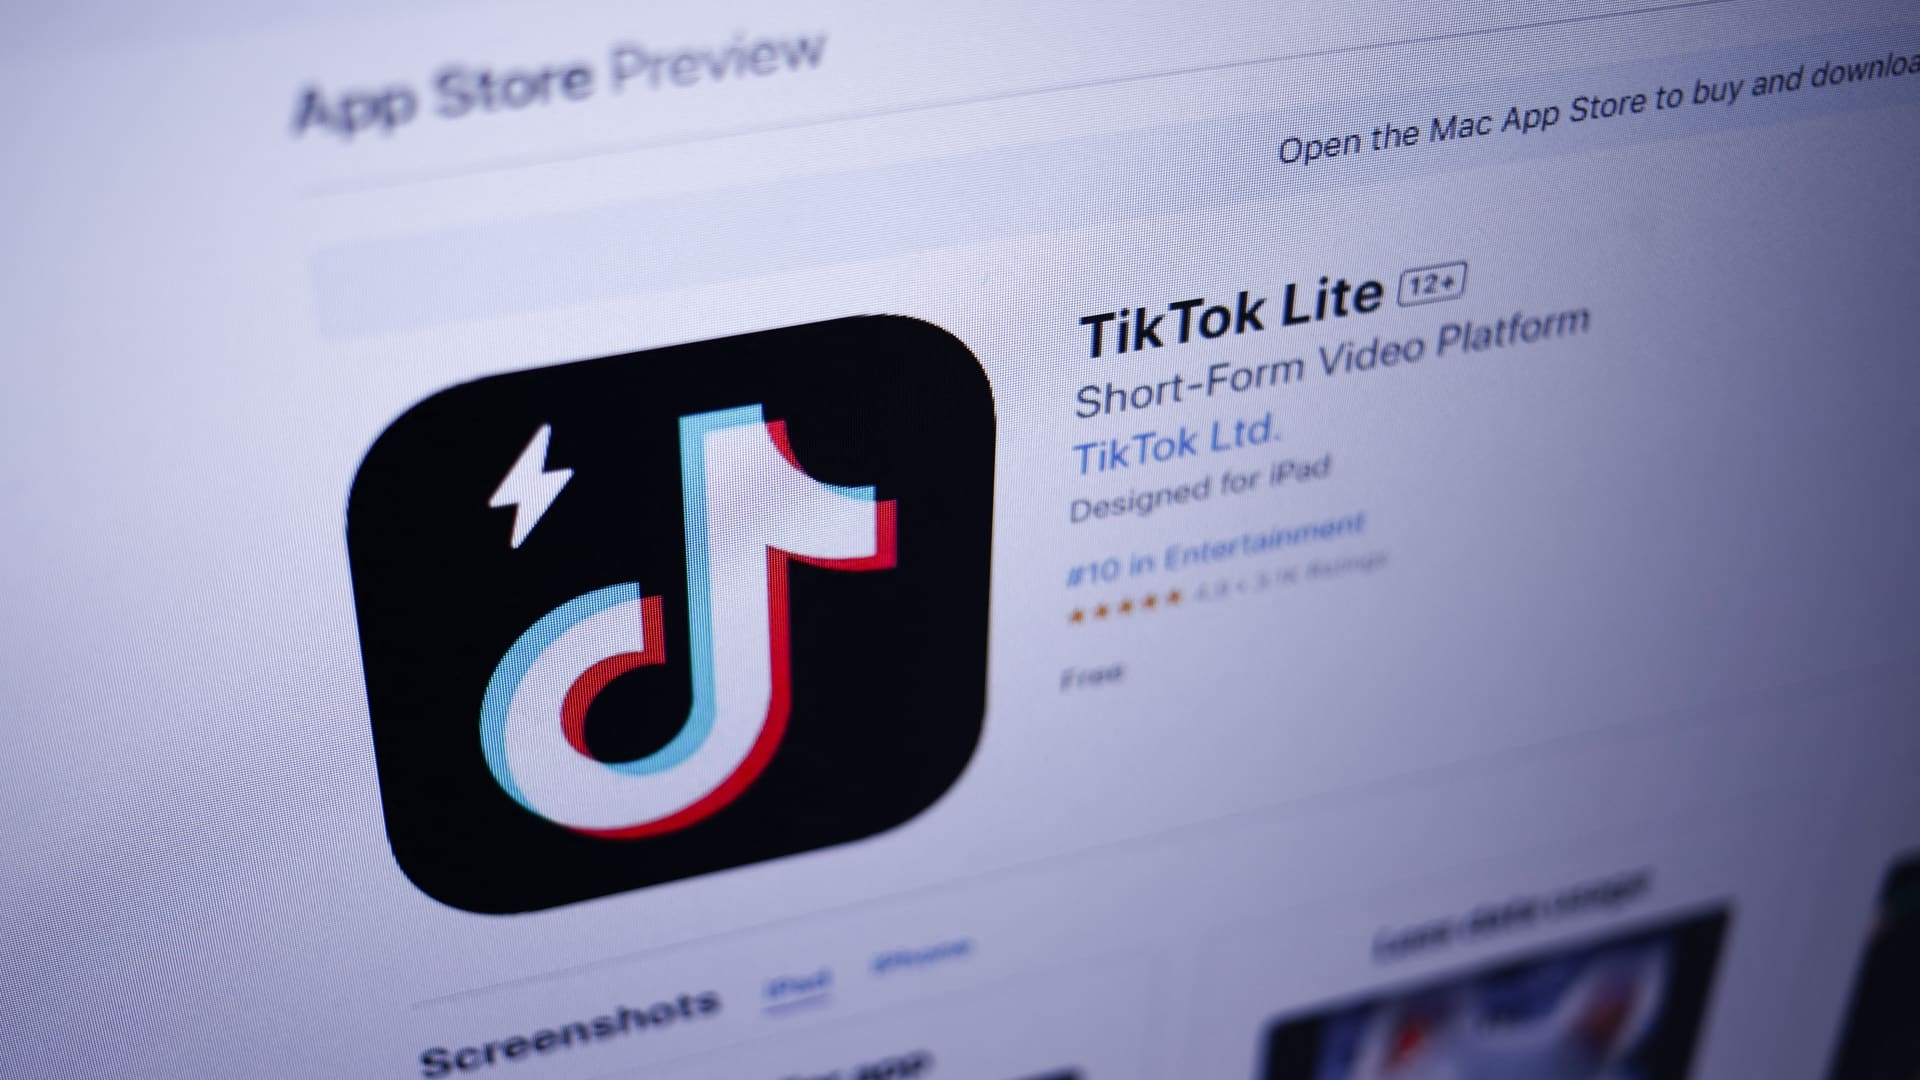 European Union threatens to suspend TikTok Lite’s rewards program